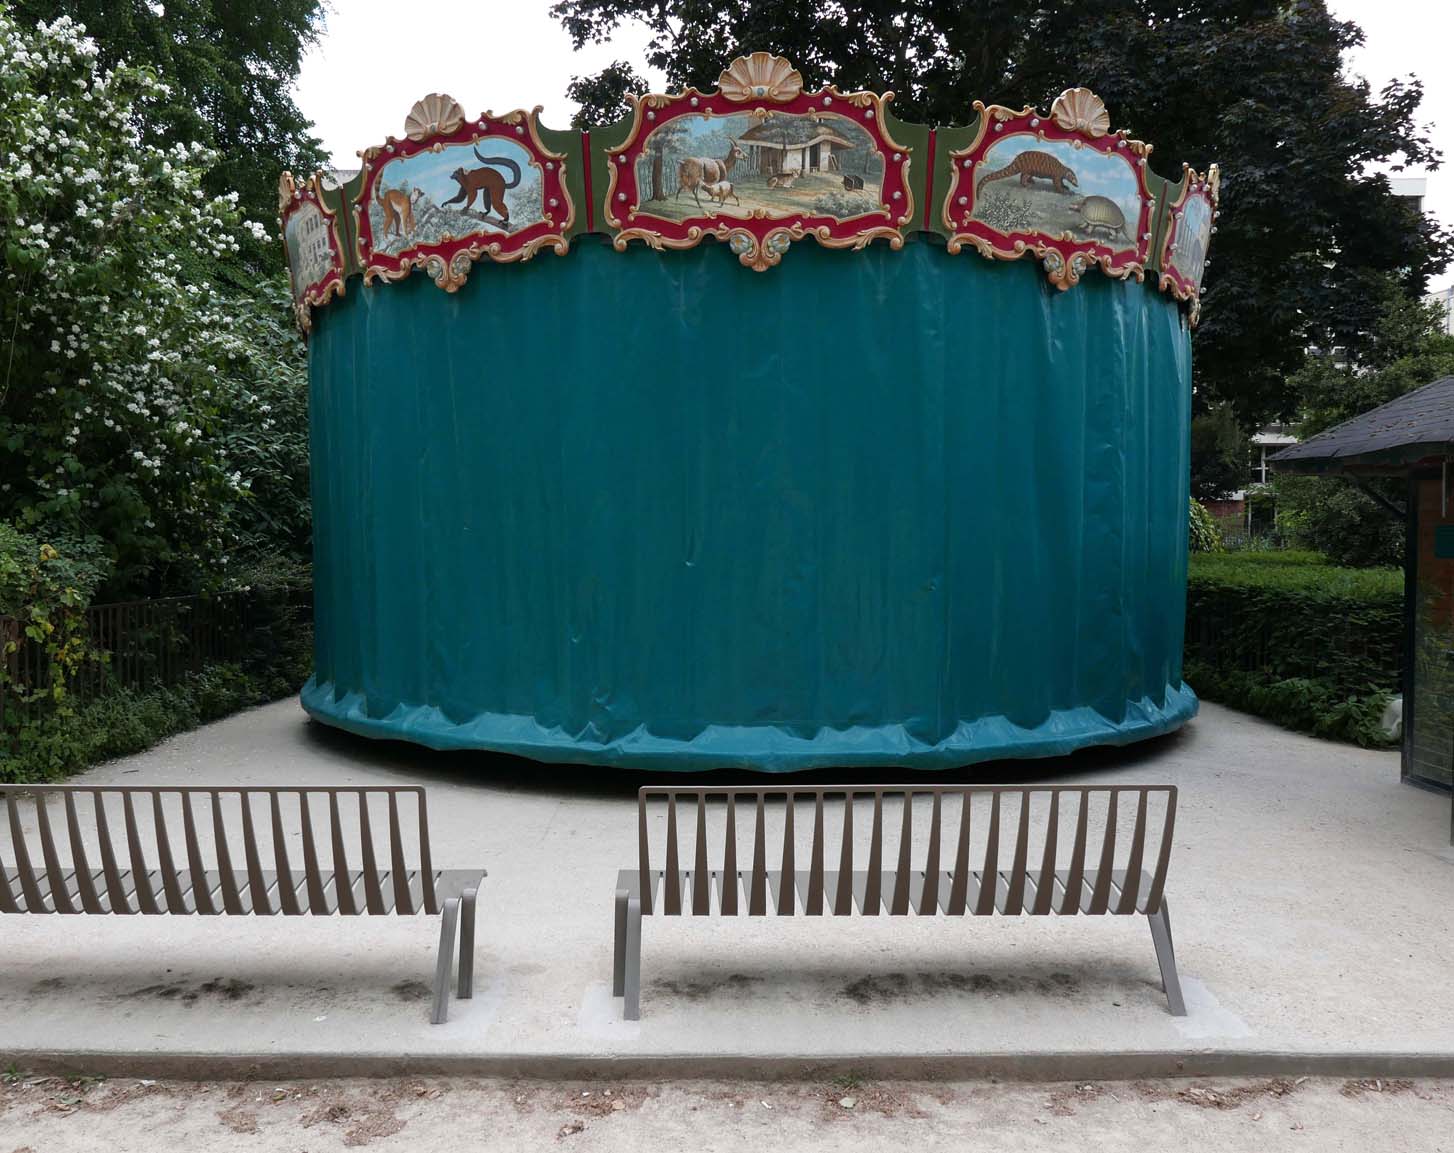 Carousel at the Jardin des Plantes